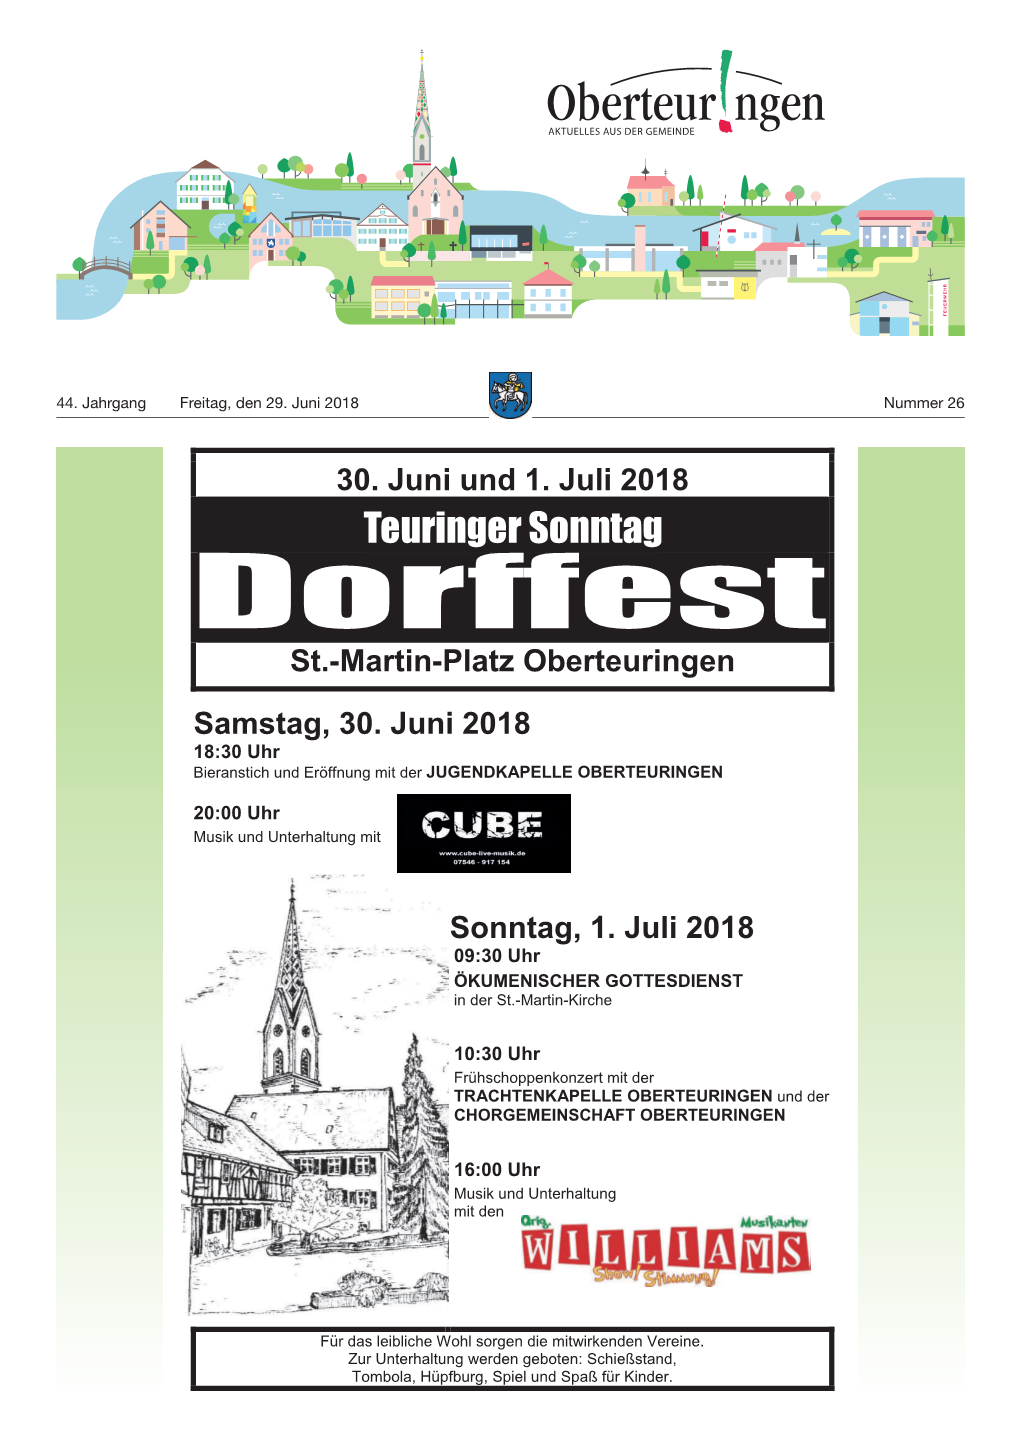 Martin-Platz Oberteuringen Samstag, 30. Juni 2018 Sonntag, 1. Juli 2018